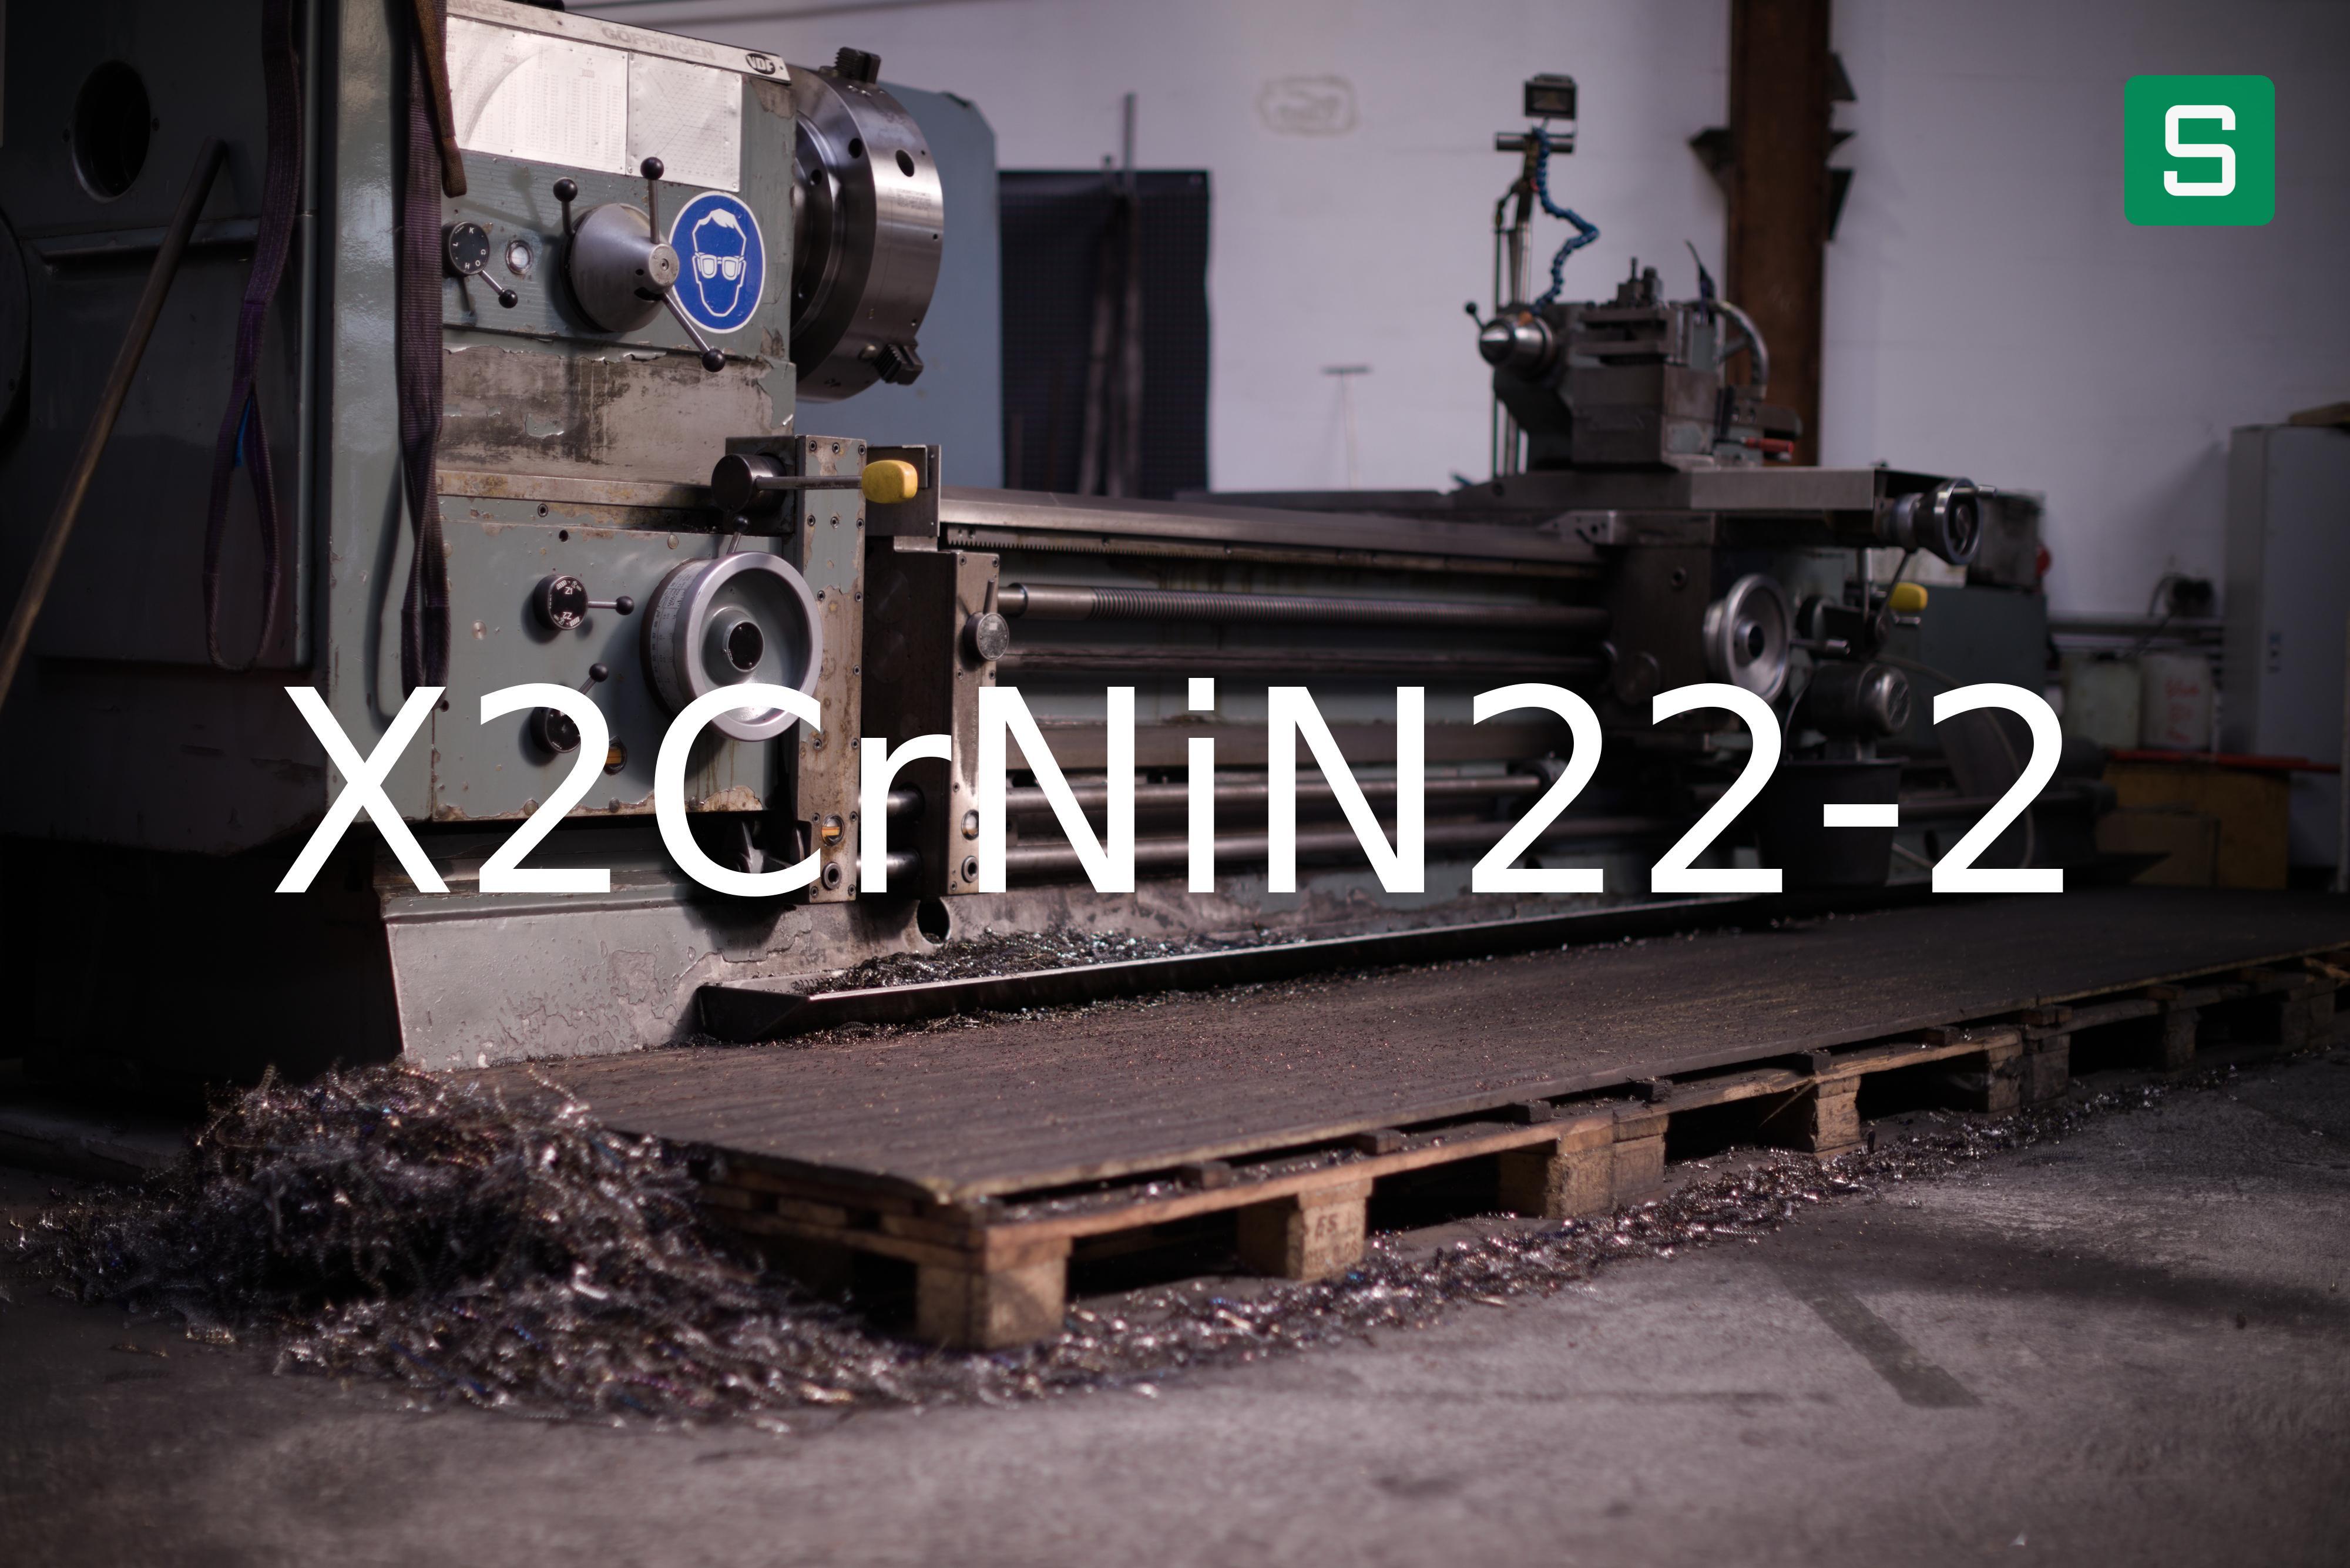 Steel Material: X2CrNiN22-2